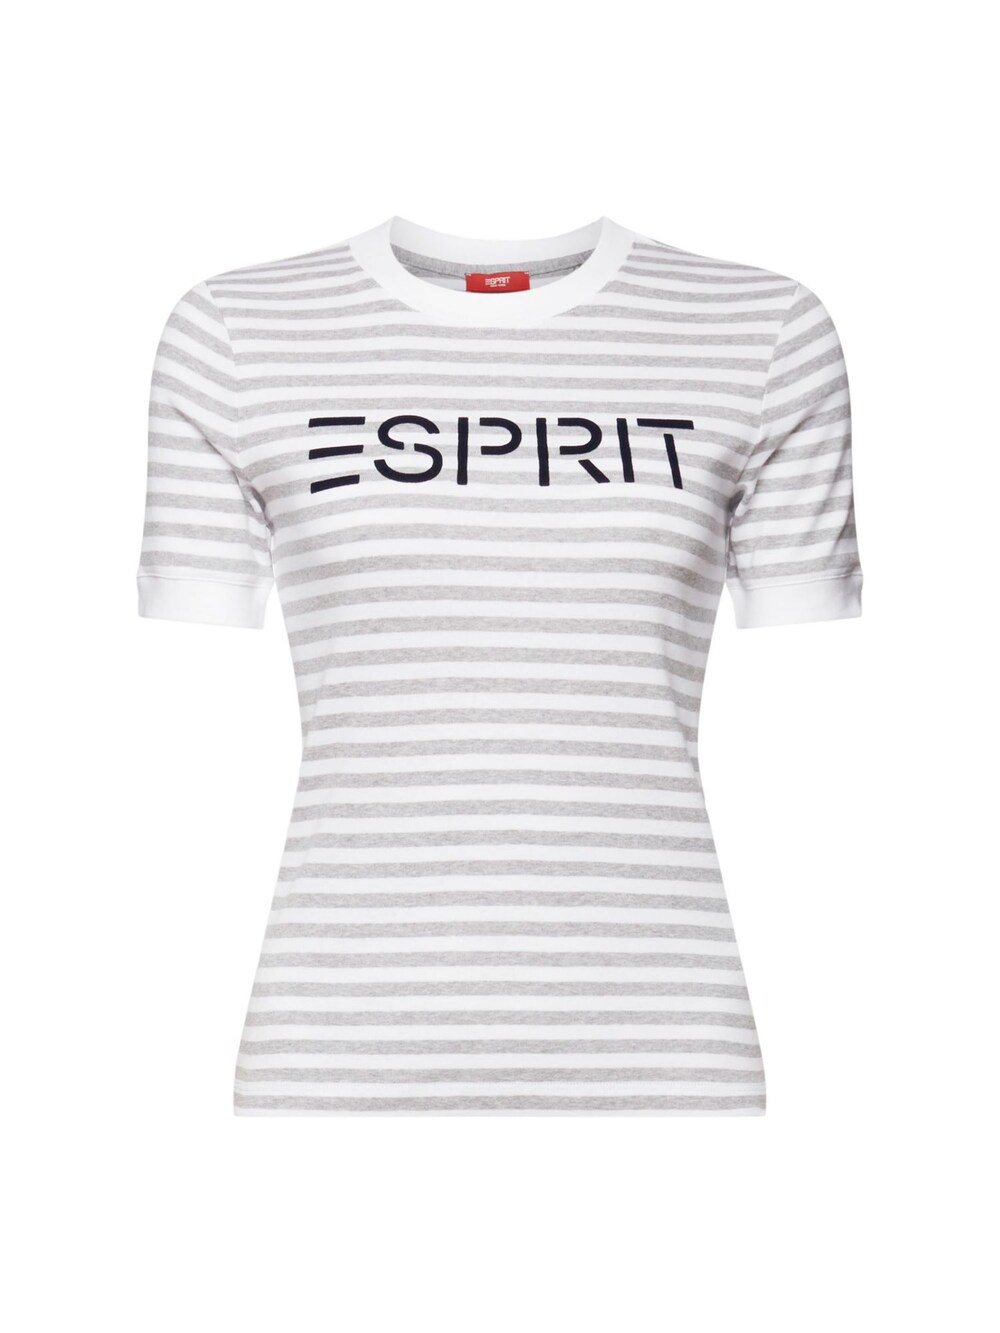 Рубашка Esprit, светло-серый/белый рубашка esprit светло серый